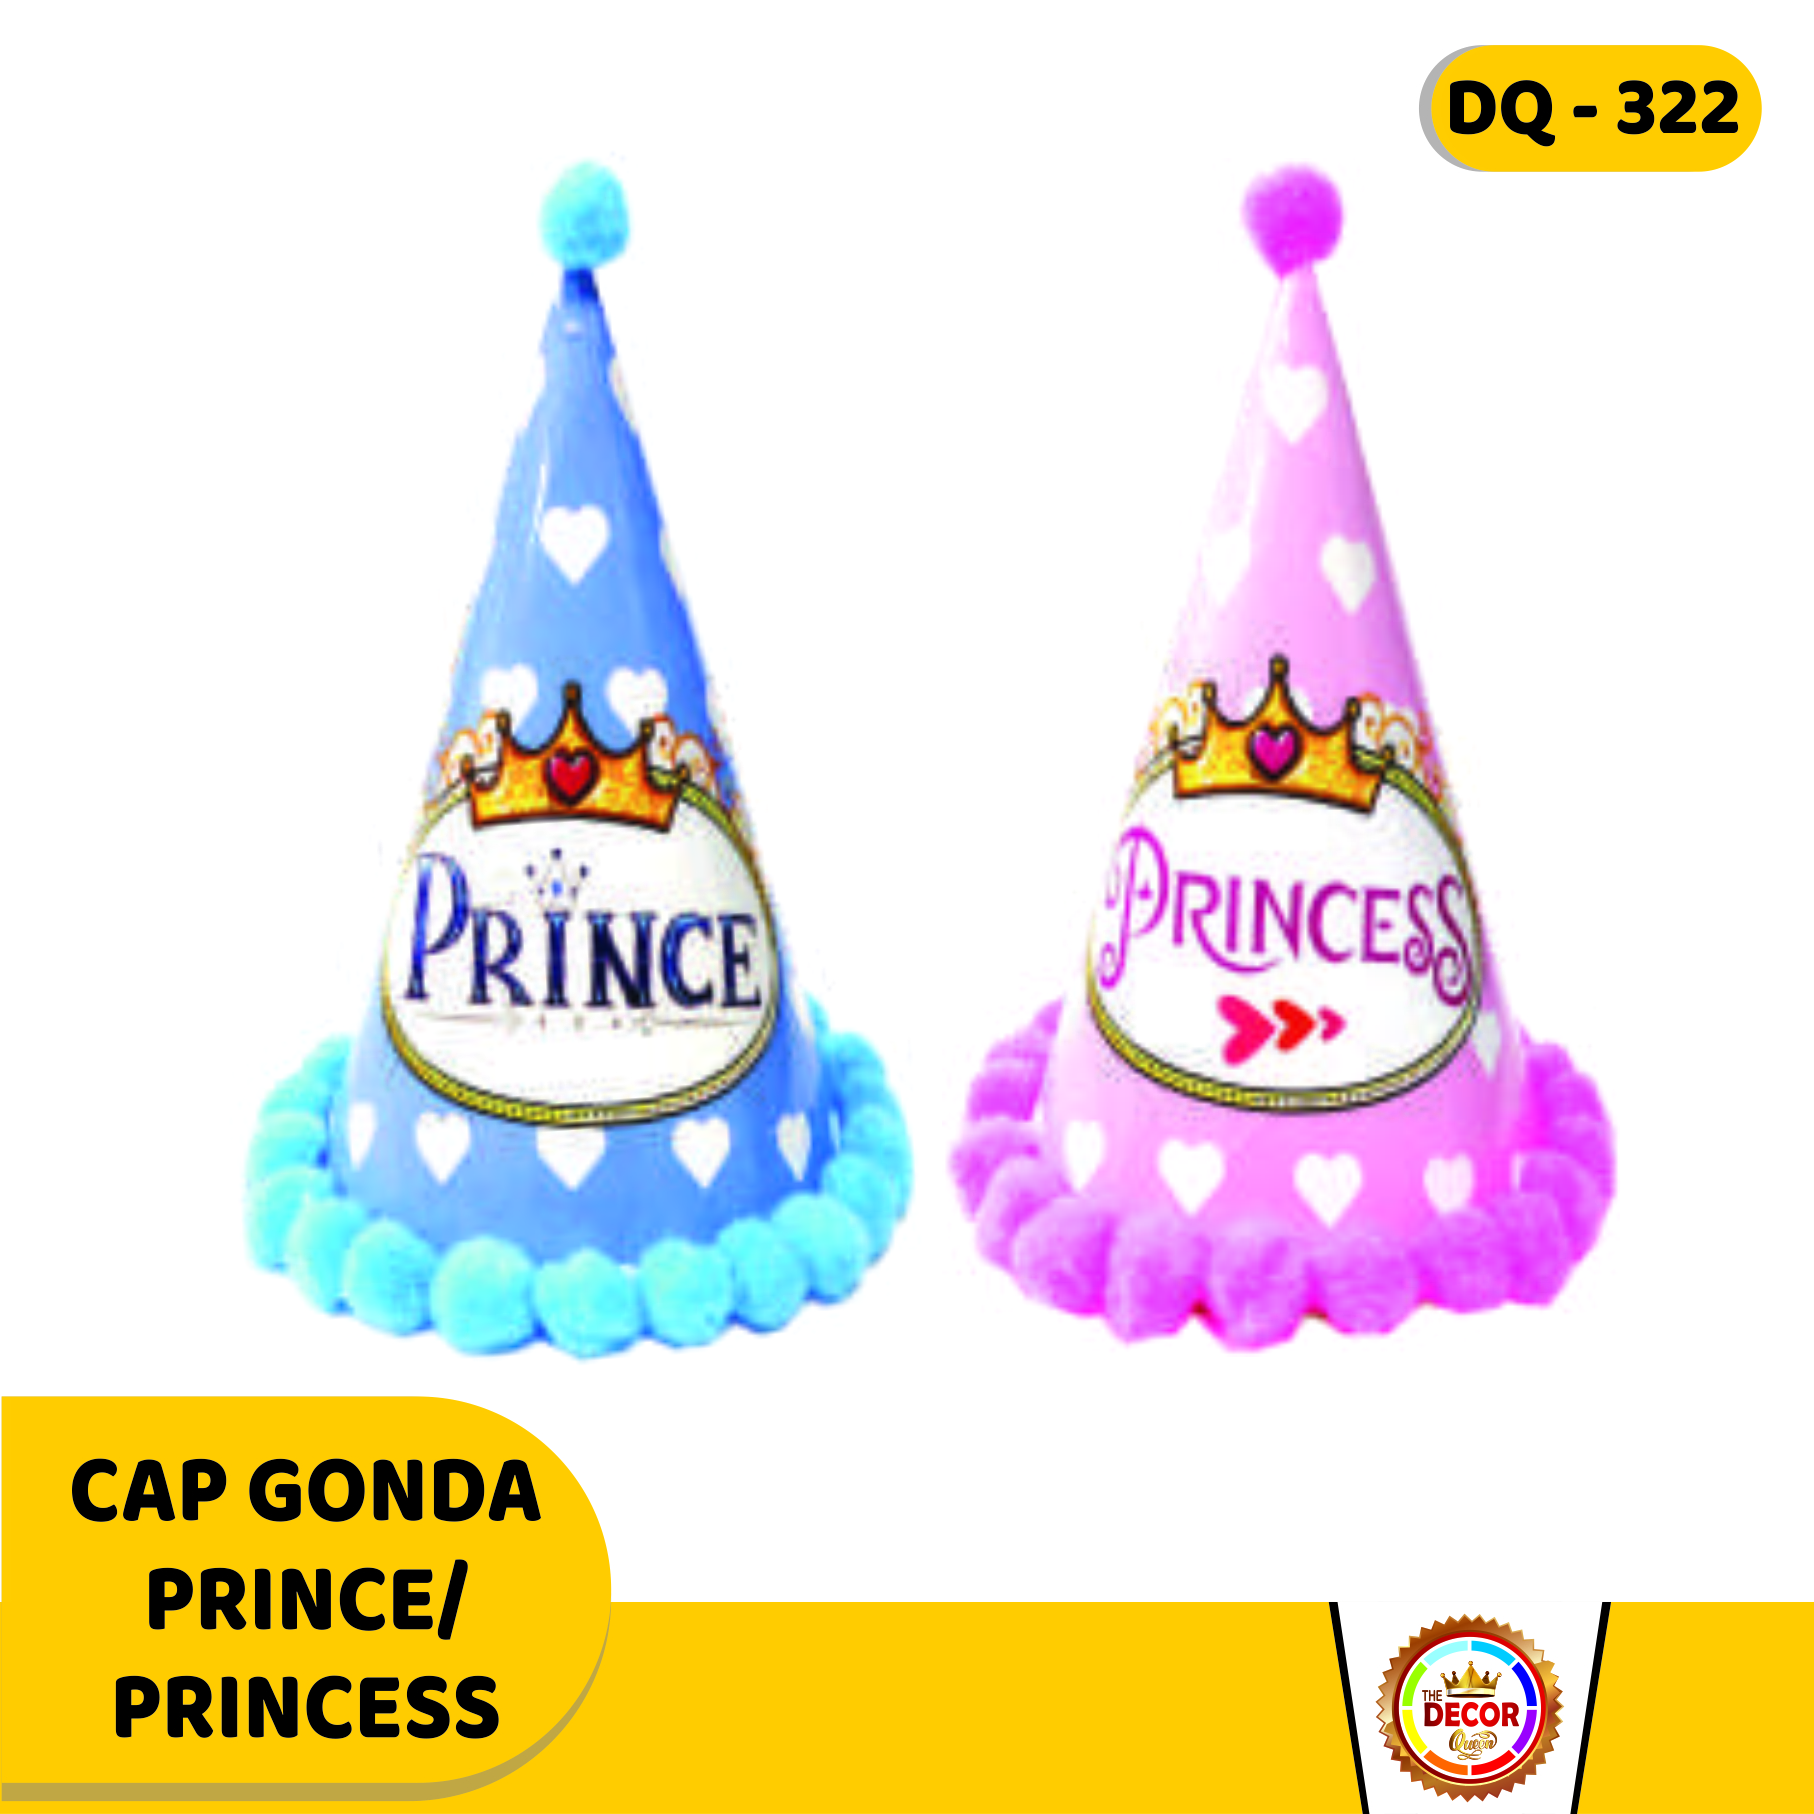 CAP GONDA PRINCE/PRINCESS|Party Products|Cap